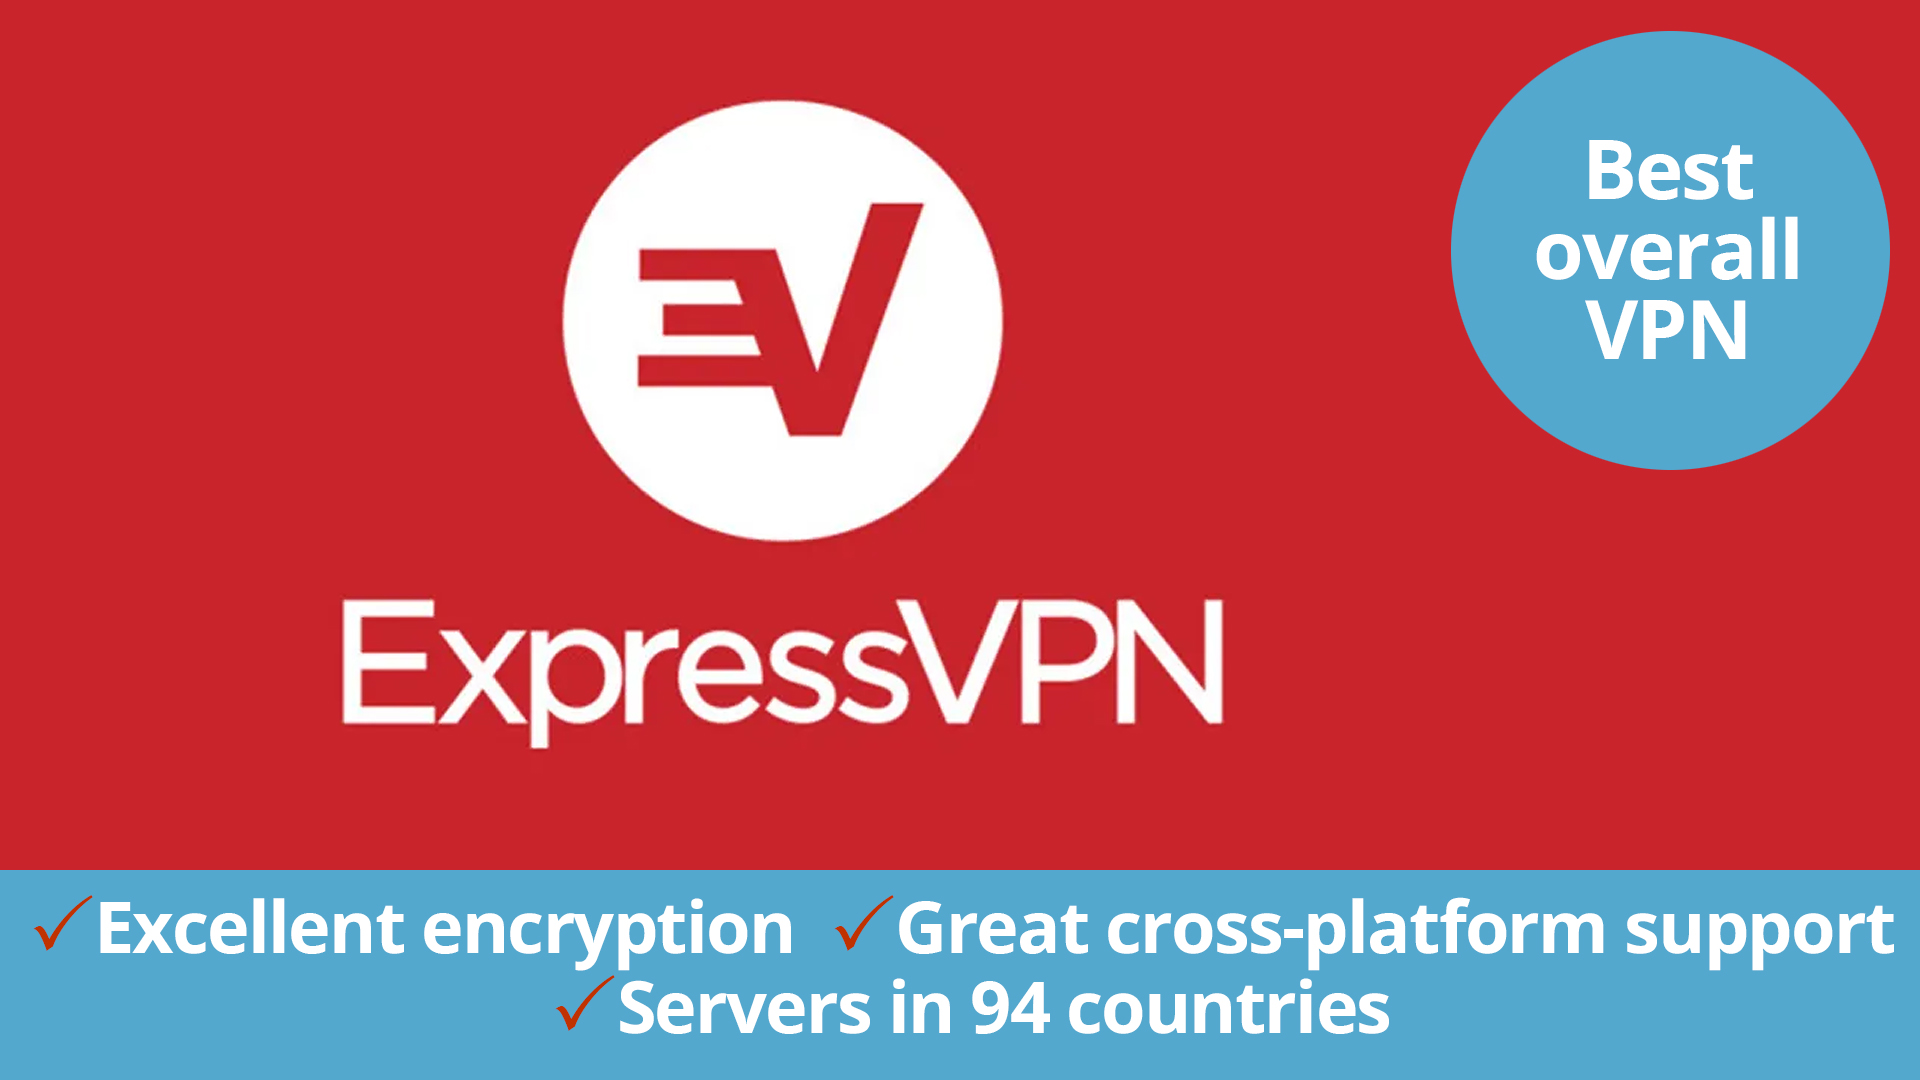 expressvpn logo for best vpn